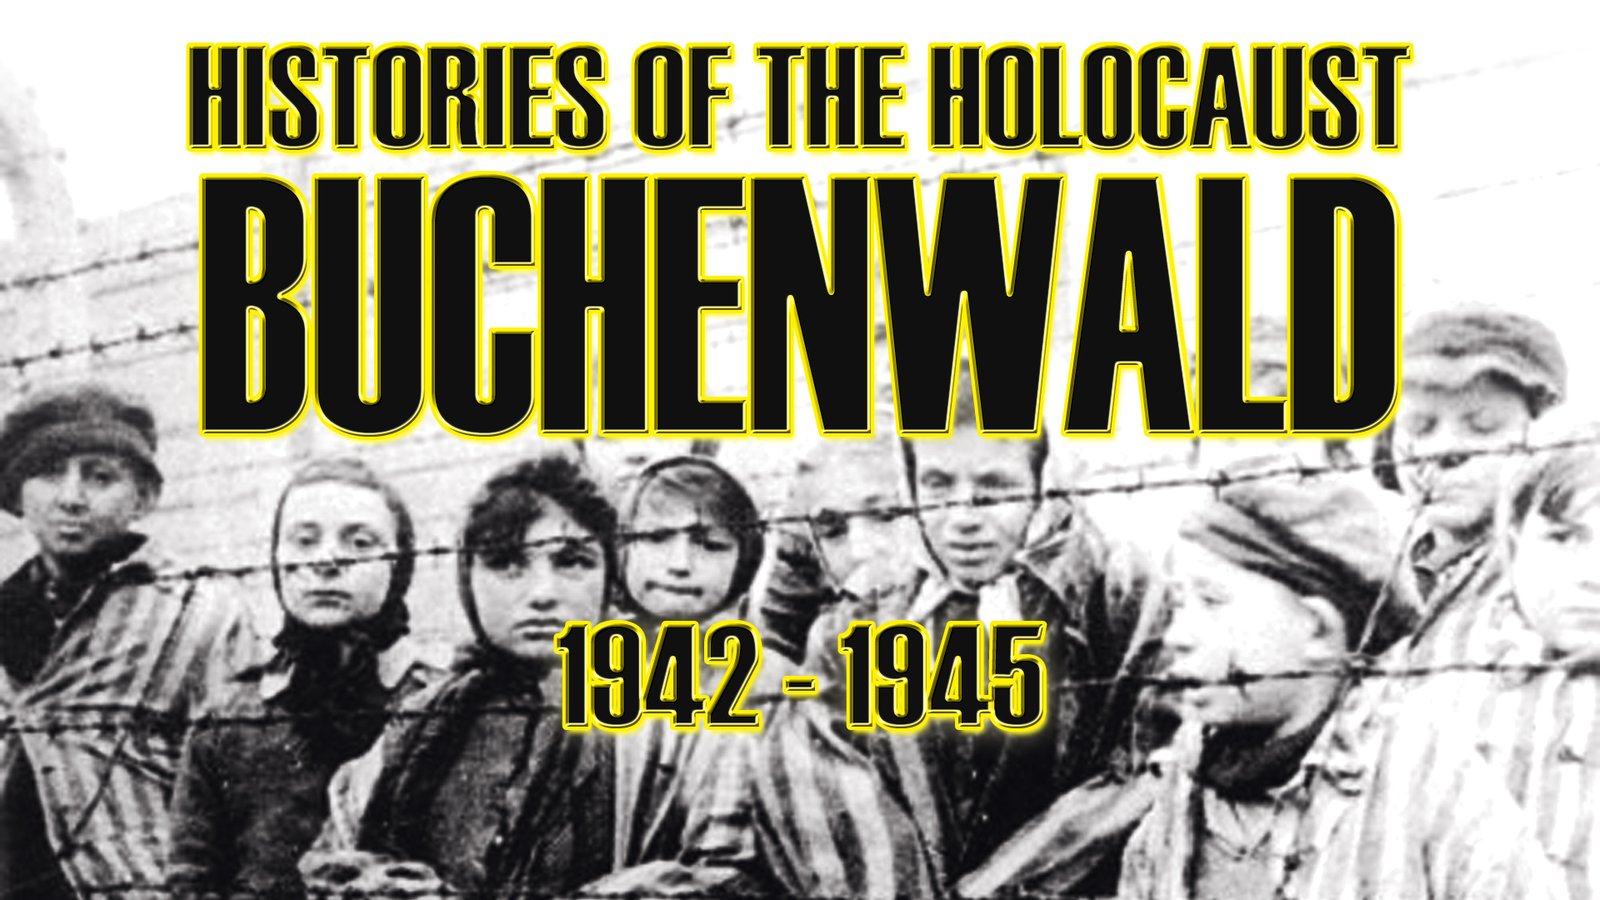 Histories of the Holocaust - Buchenwald: 1937-1945